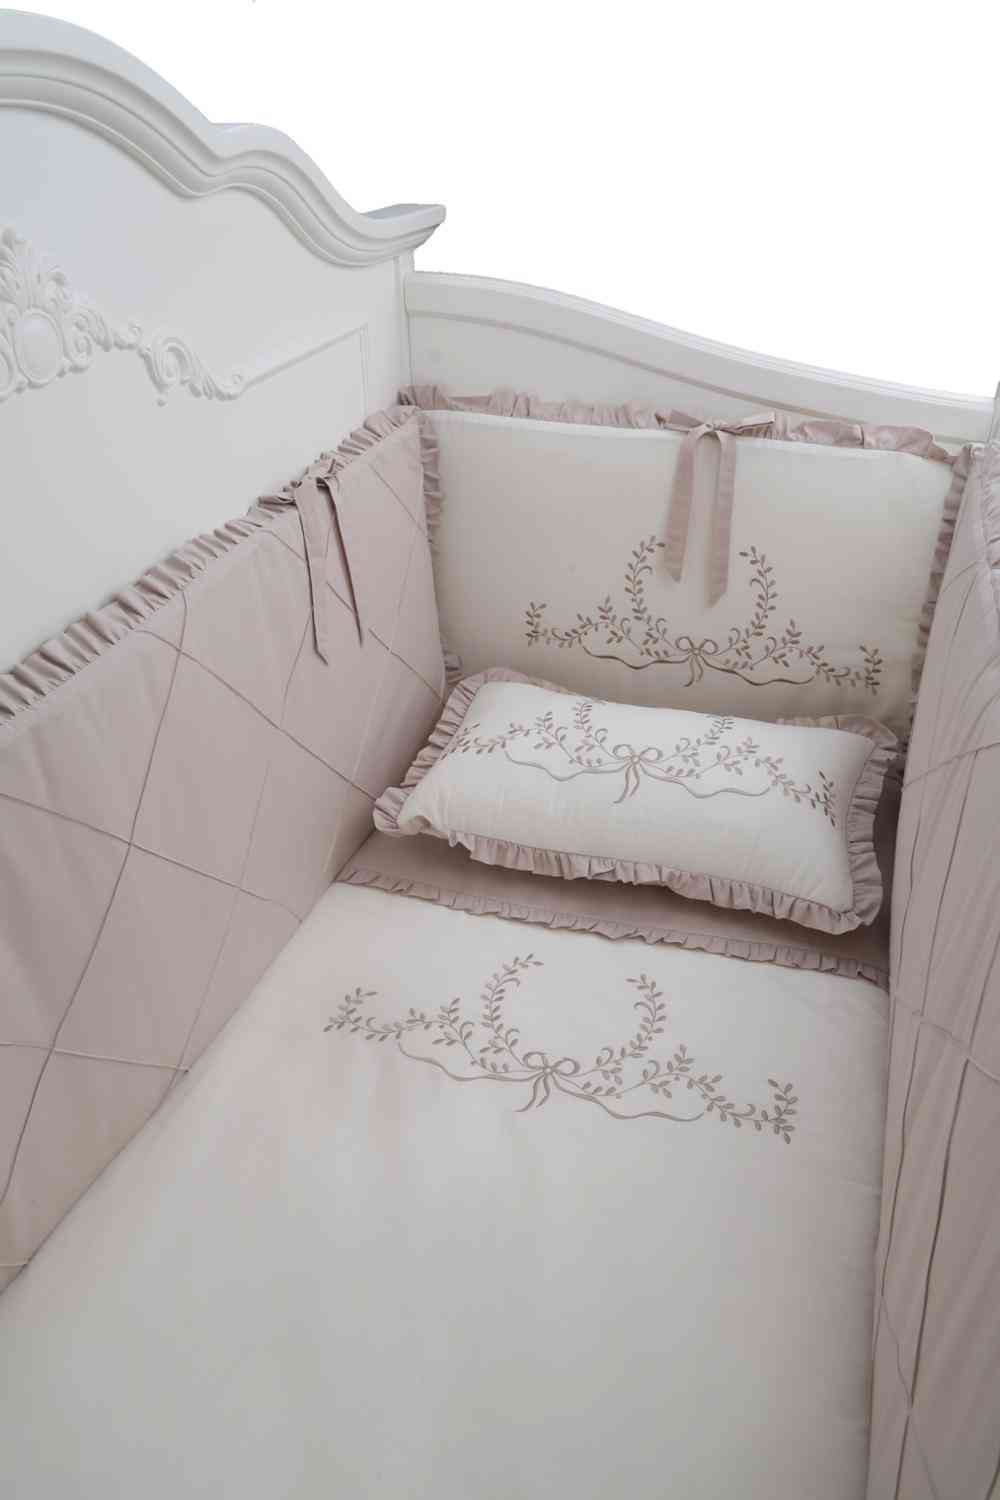 Embroidered Bedding Set, Baby Duvet Cover